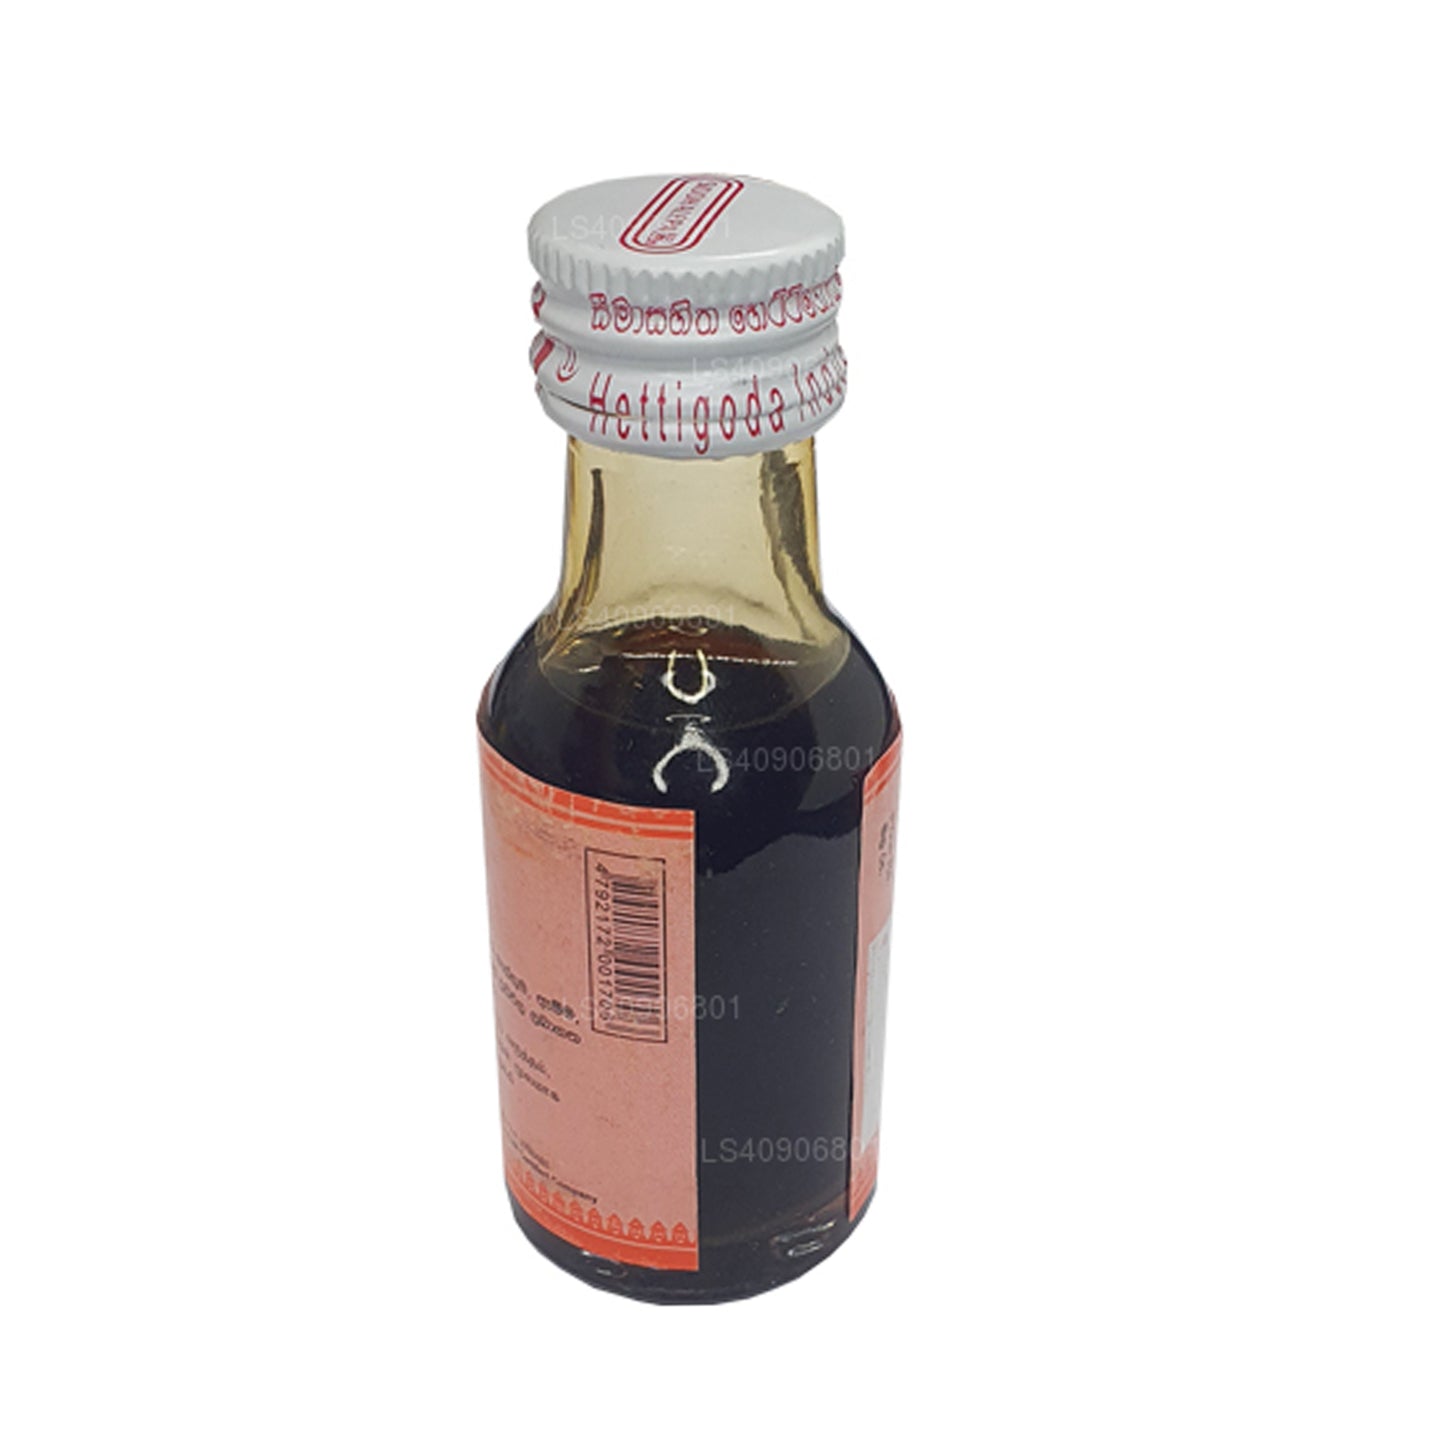 Siddhalepa Vatha olie (30 ml)